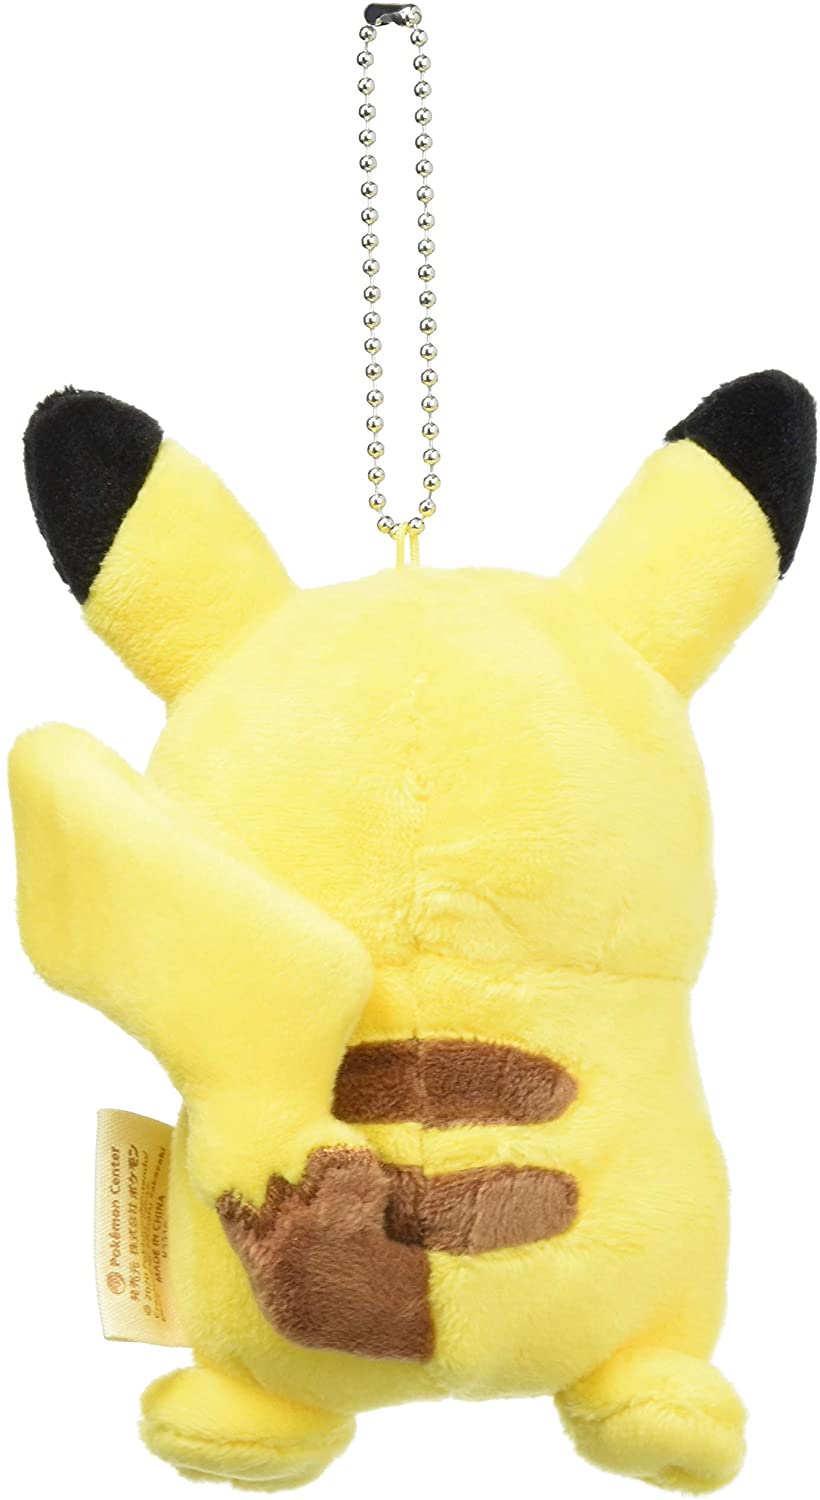 Pokemon - Pikachu - Plush Mascot - Pokemon Leisure Life (Pokemon Center)